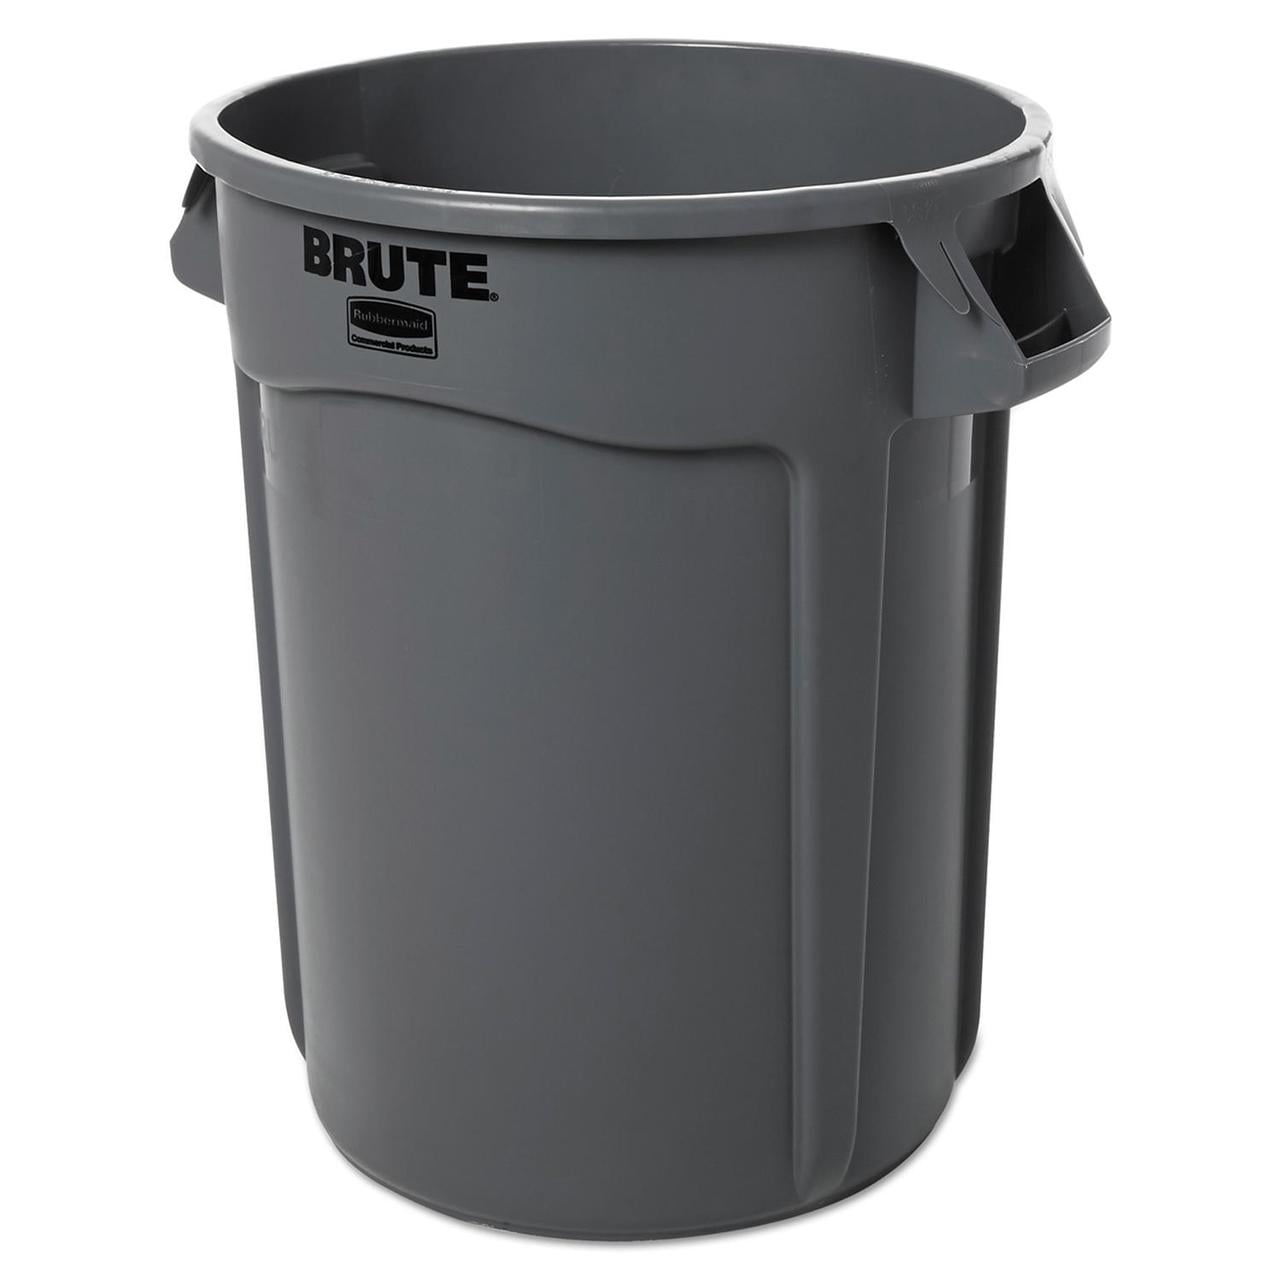 Rubbermaid Brute® Trash Can Lids, Assorted Colors, 32 Gallon